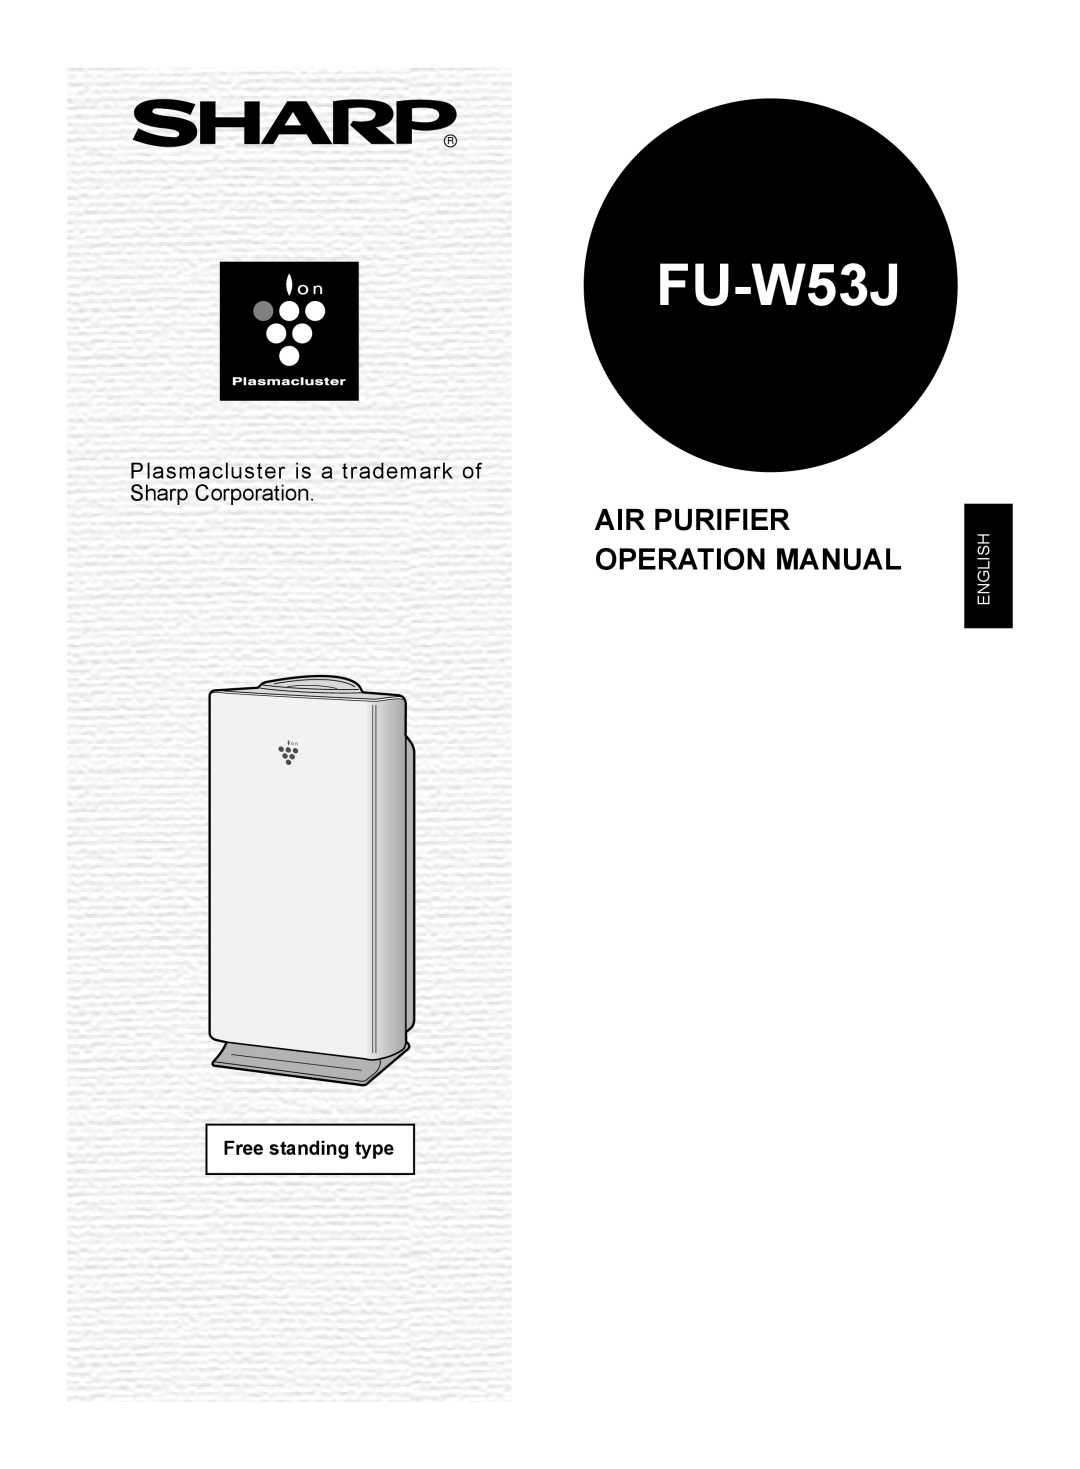 Sharp FU-W53J operation manual Plasmacluster is a trademark of Sharp Corporation, Free standing type, English 